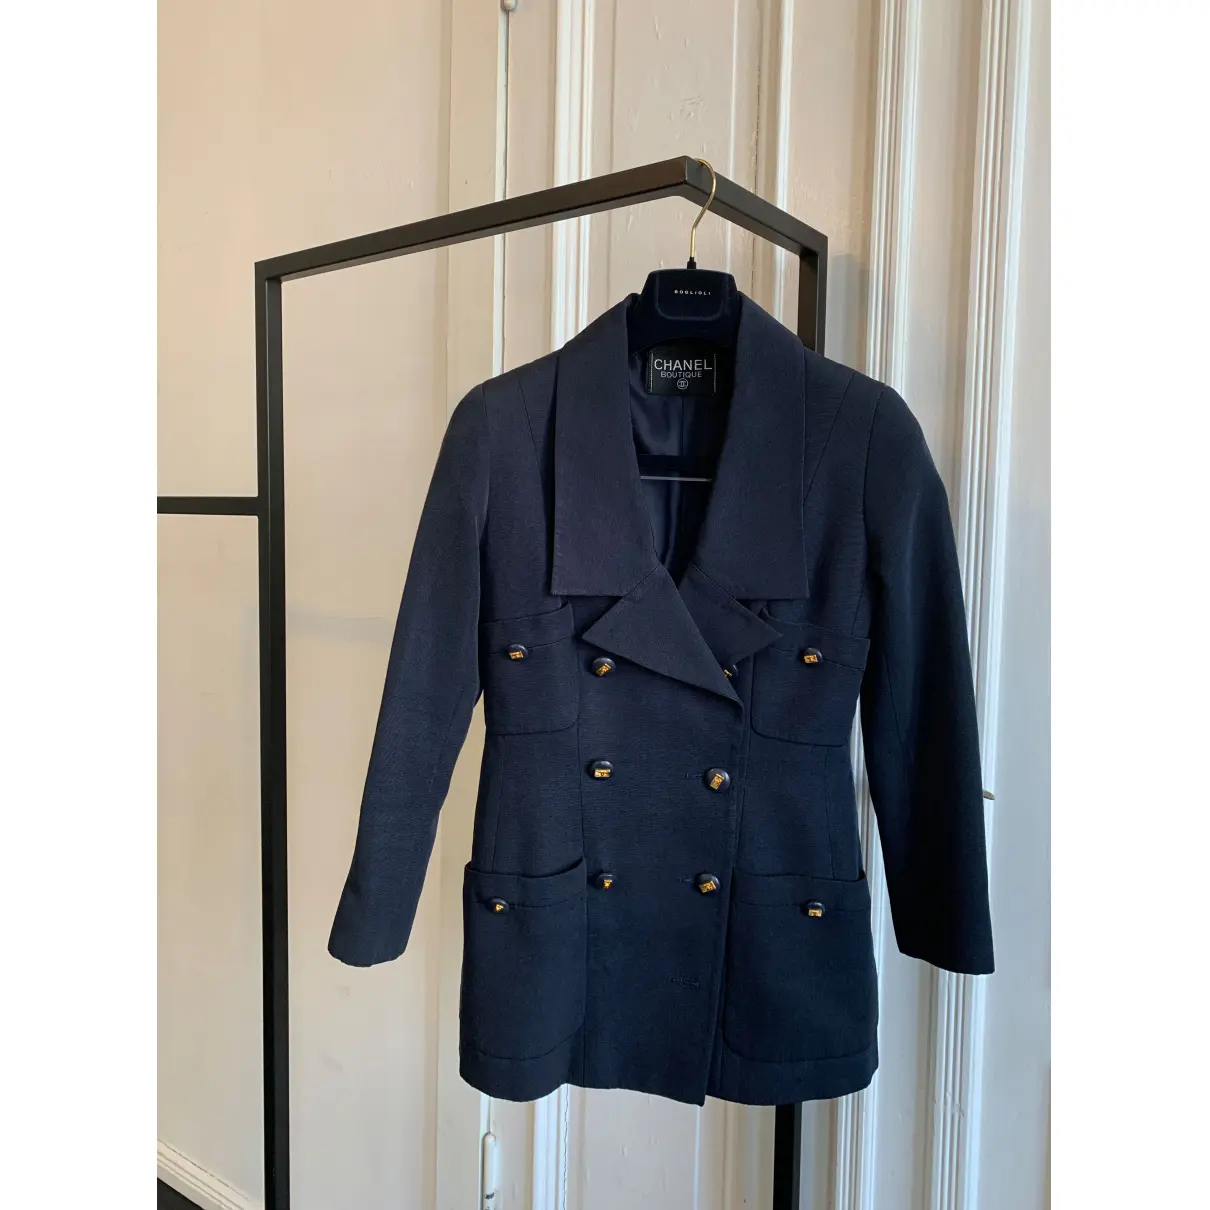 Navy Cotton Jacket Chanel